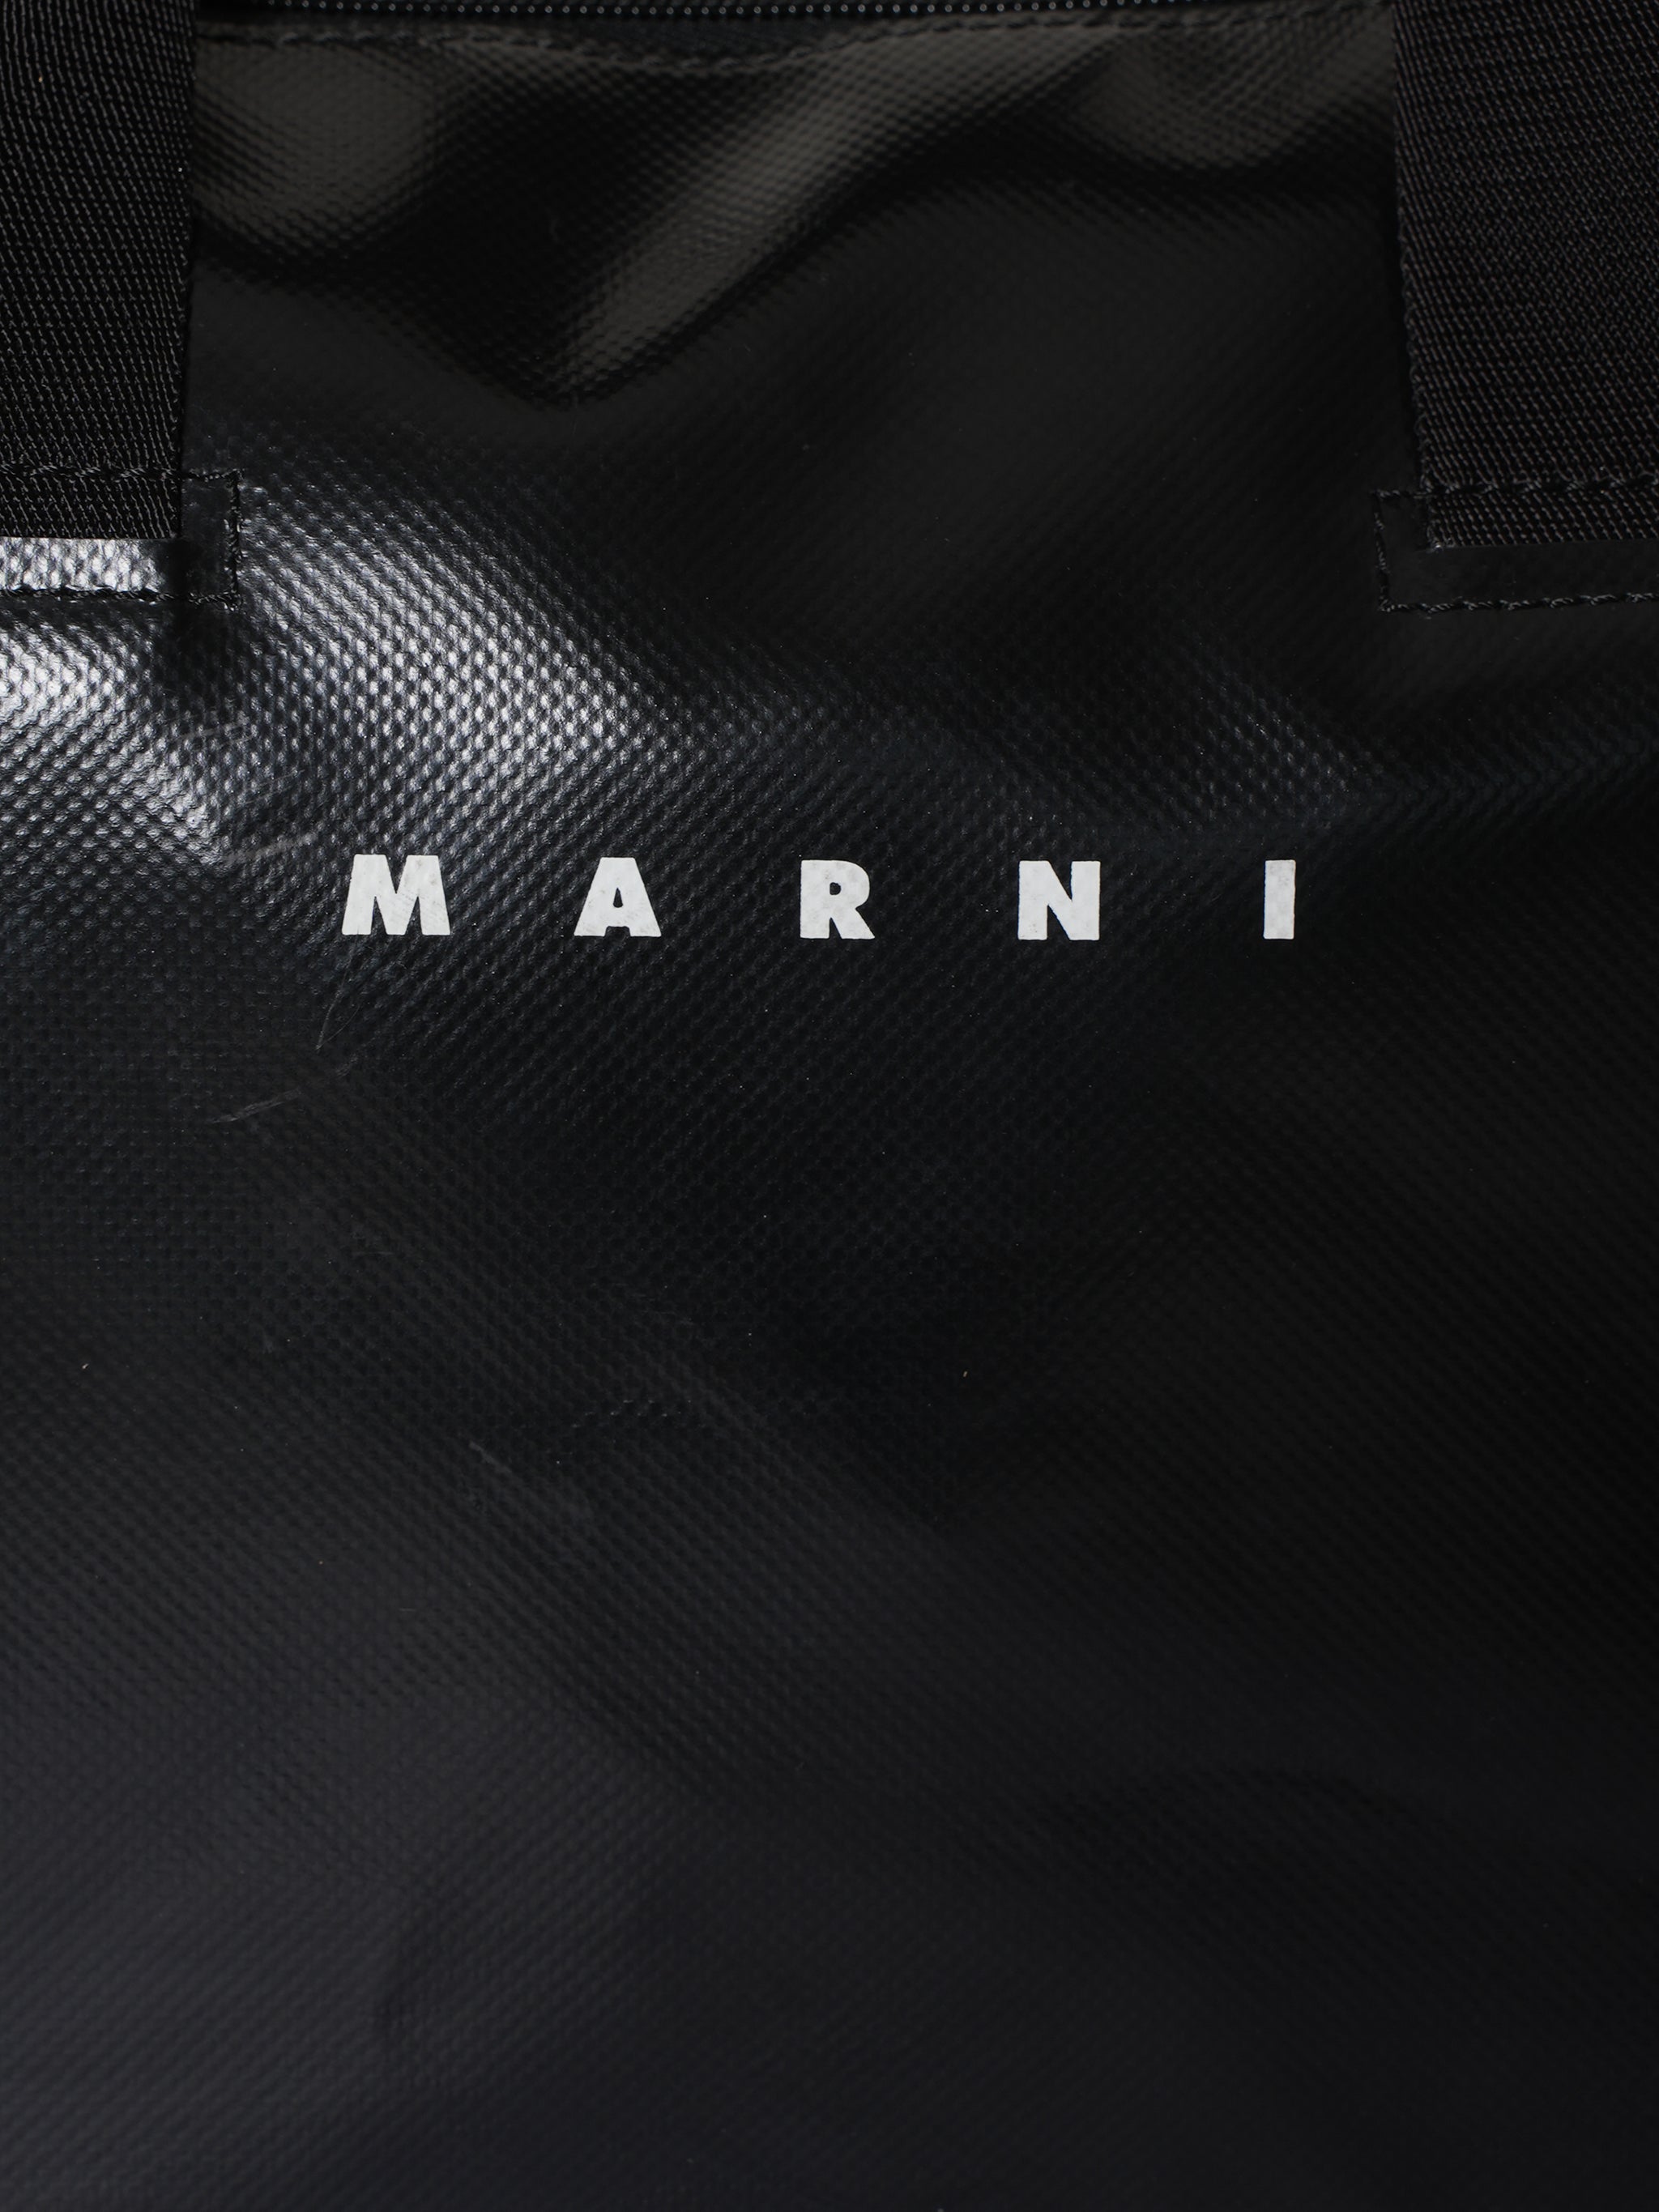 Marni Bi Coloured Black & Blue PVC Tribeca Carry All Tote Messenger Bag